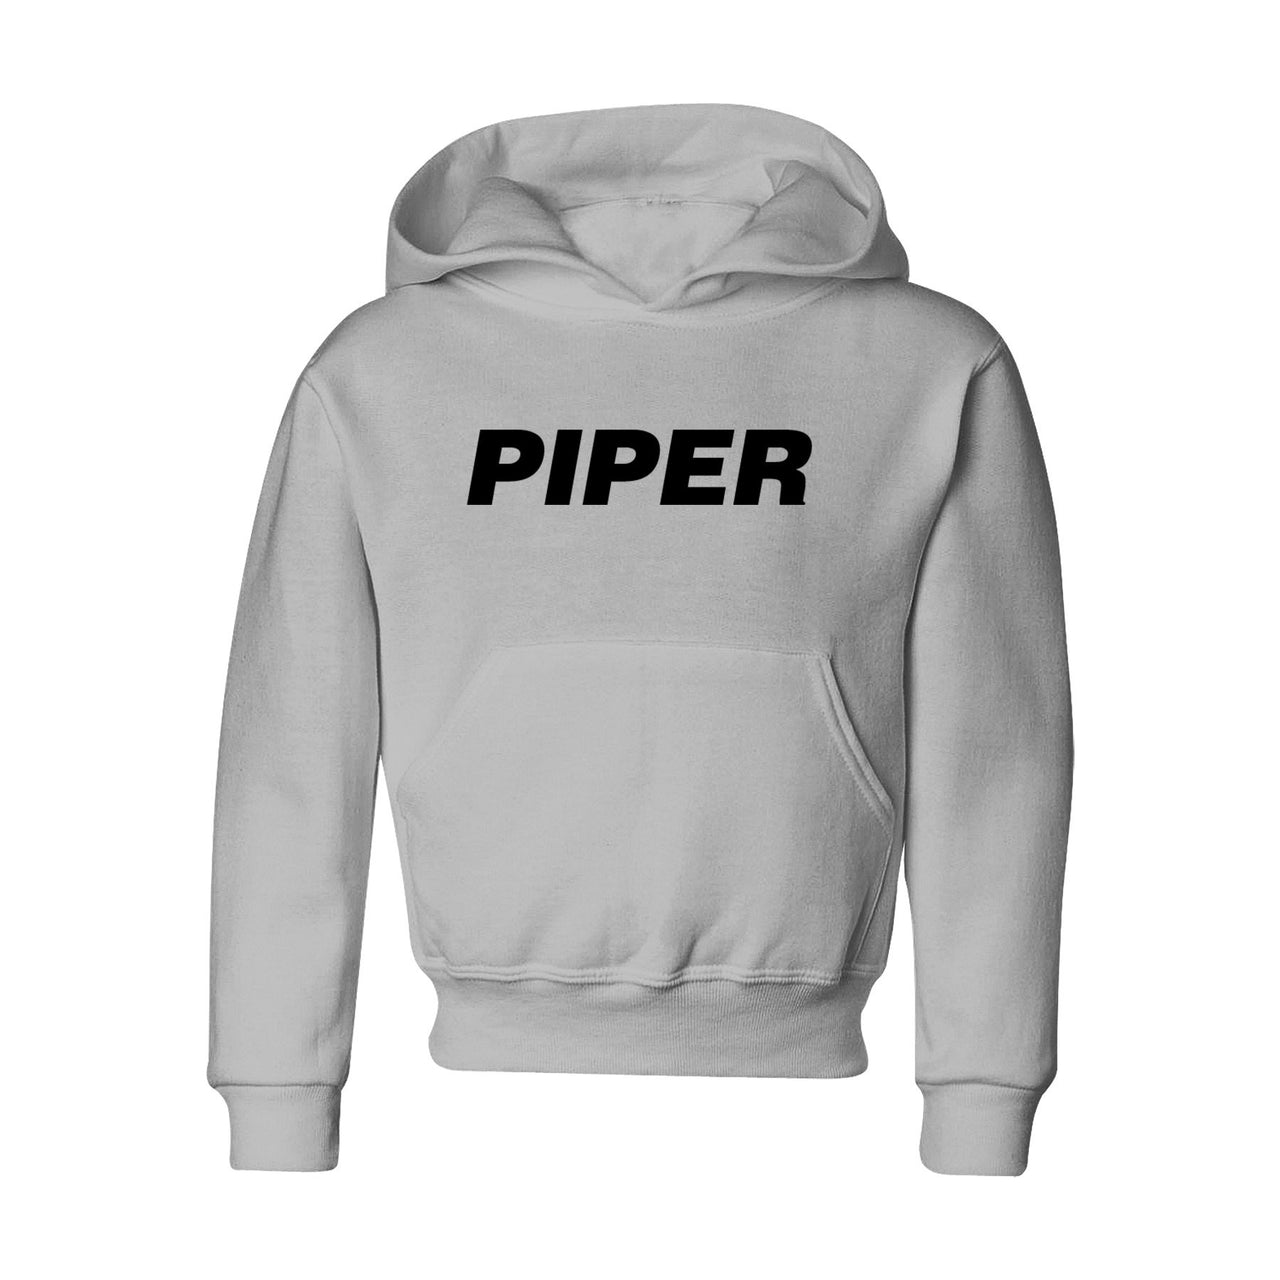 Piper & Text Designed "CHILDREN" Hoodies